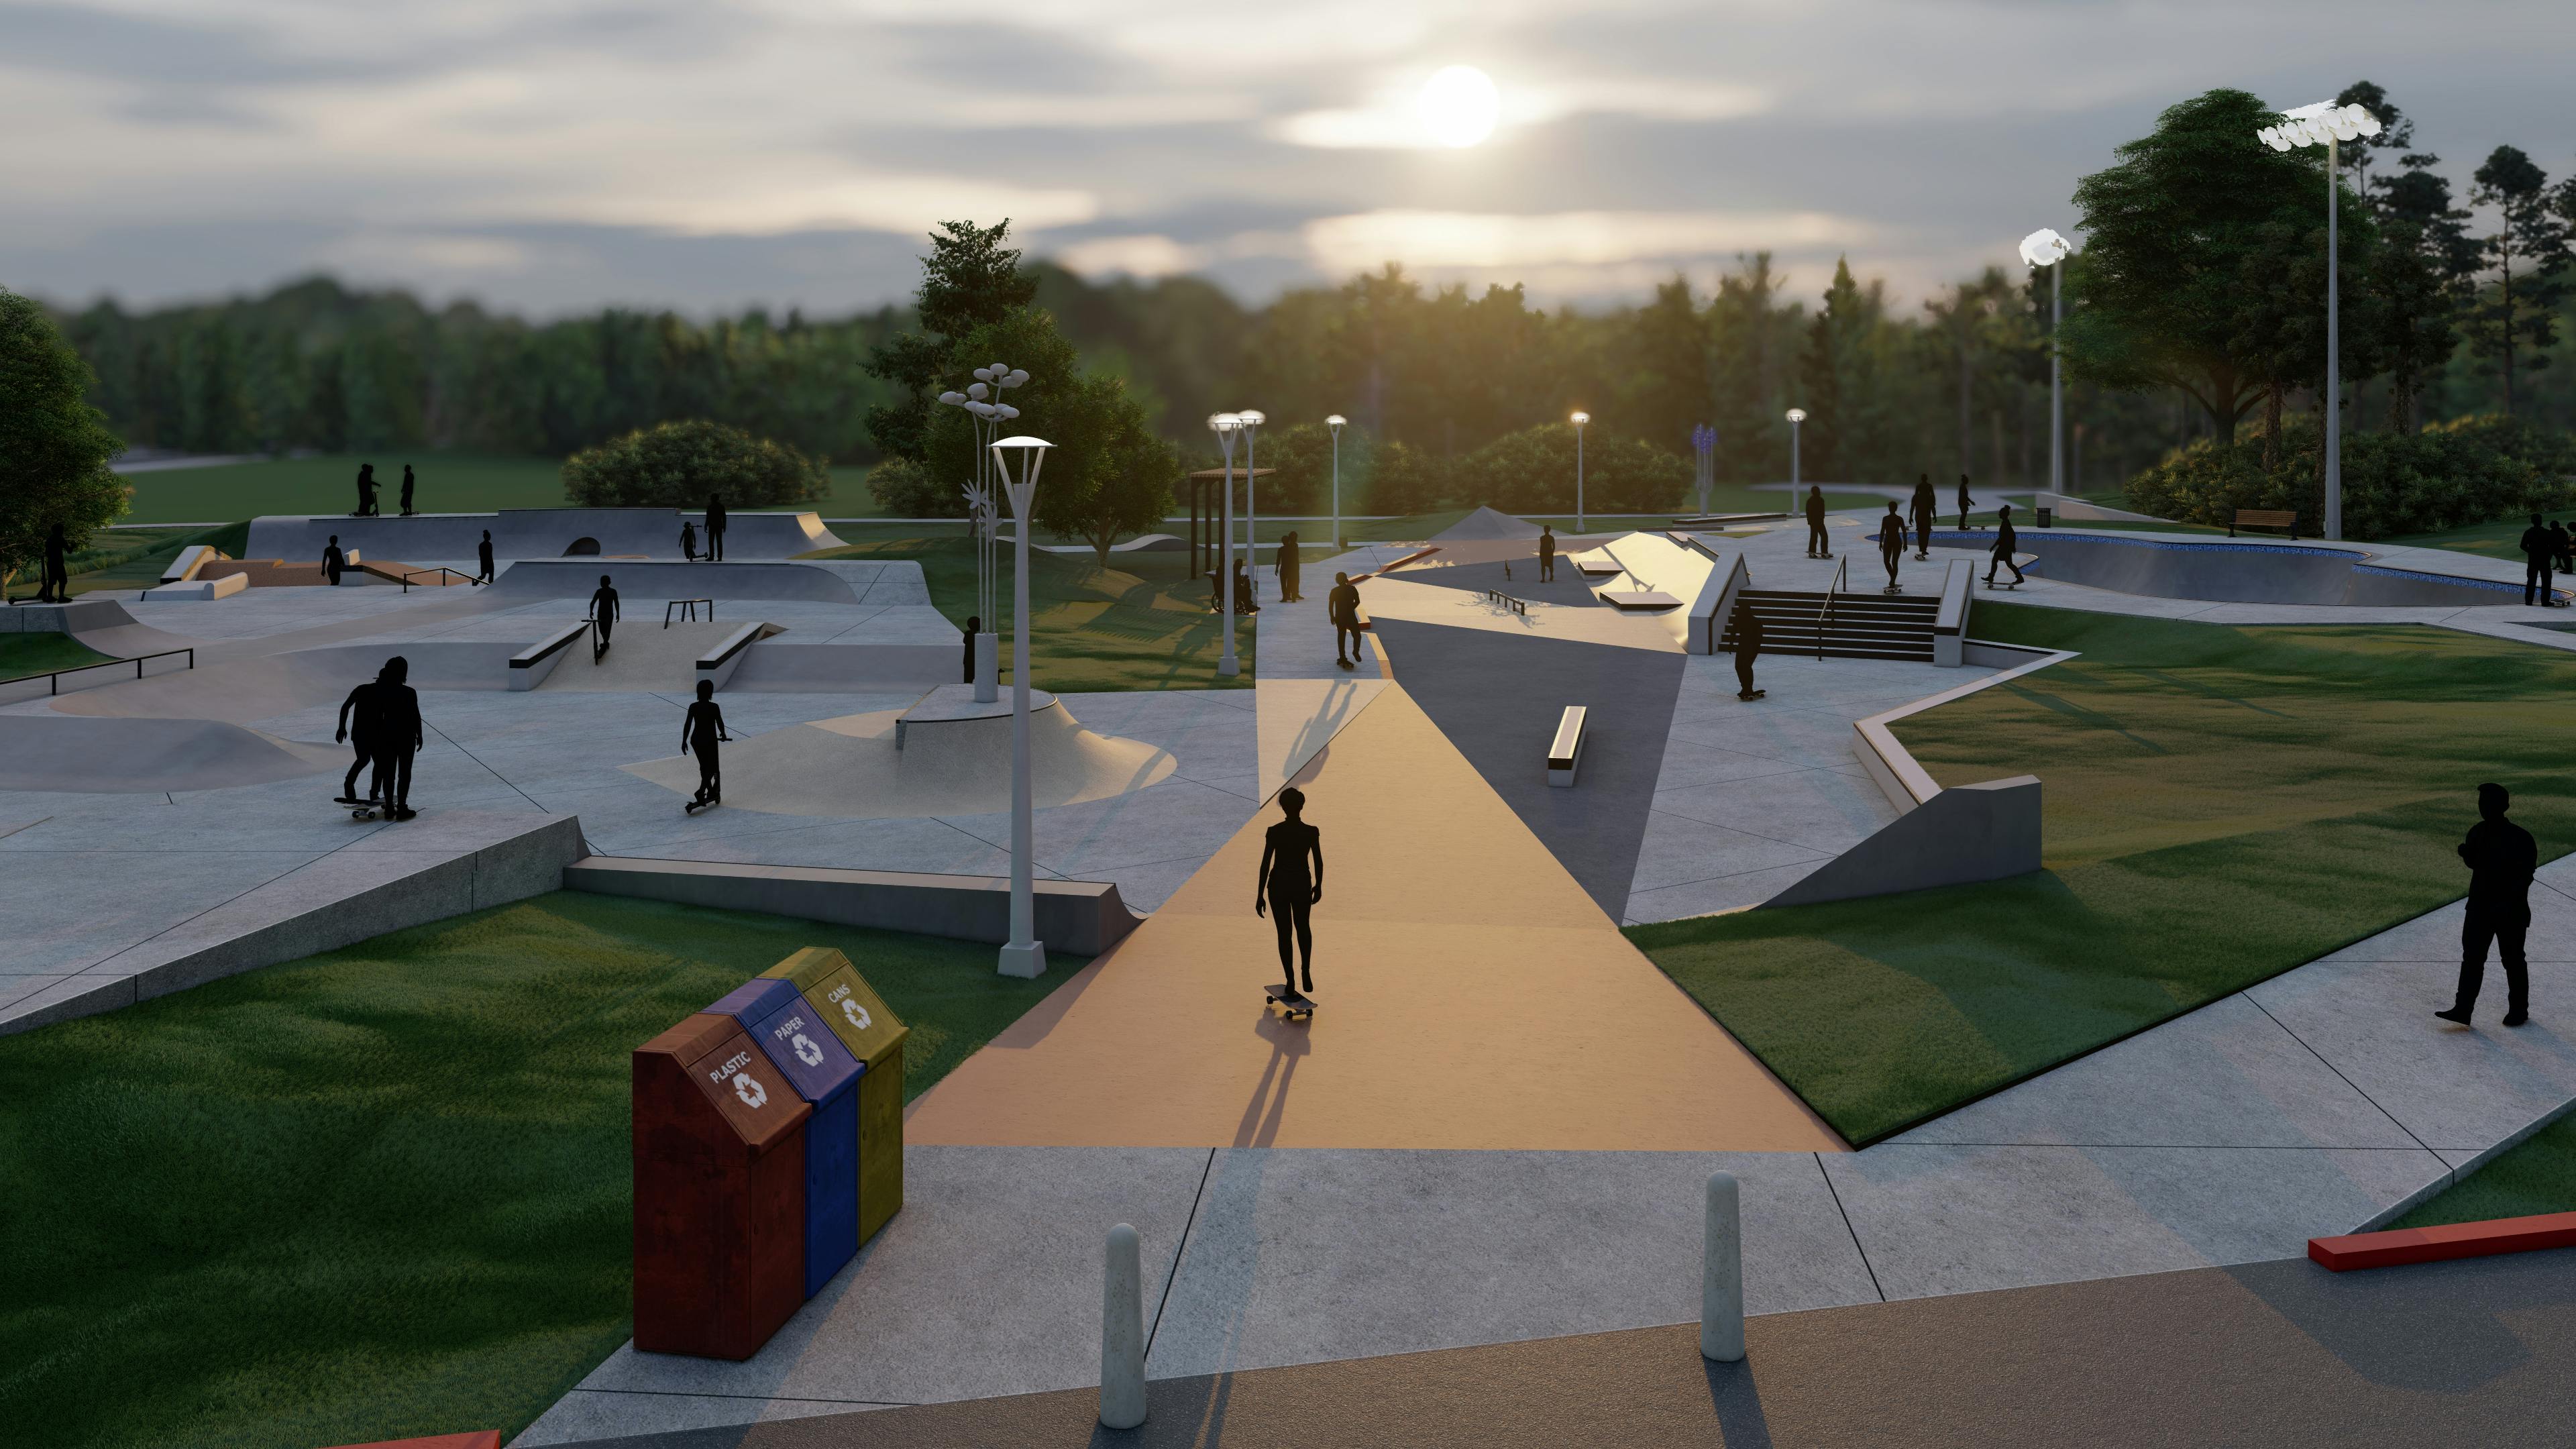 Skate Park Central Plaza Perspective.jpg